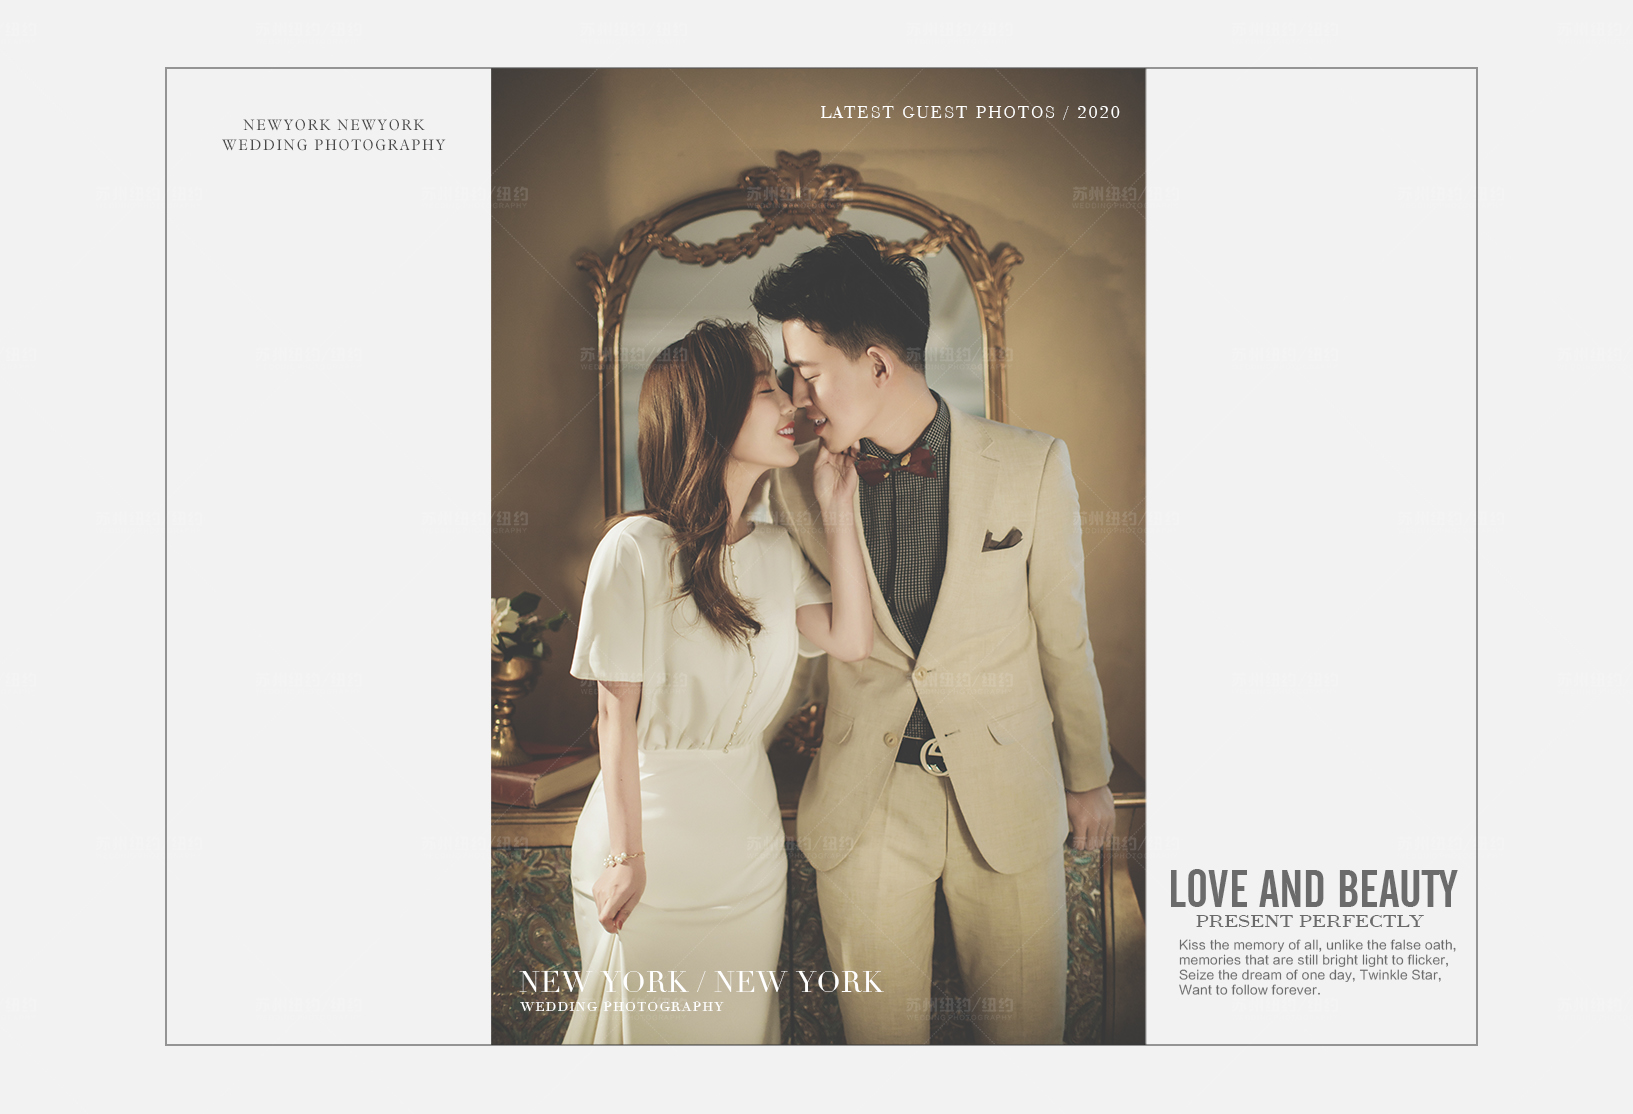 Mr.张 & Ms.程（纽约纽约最新客照）婚纱摄影照